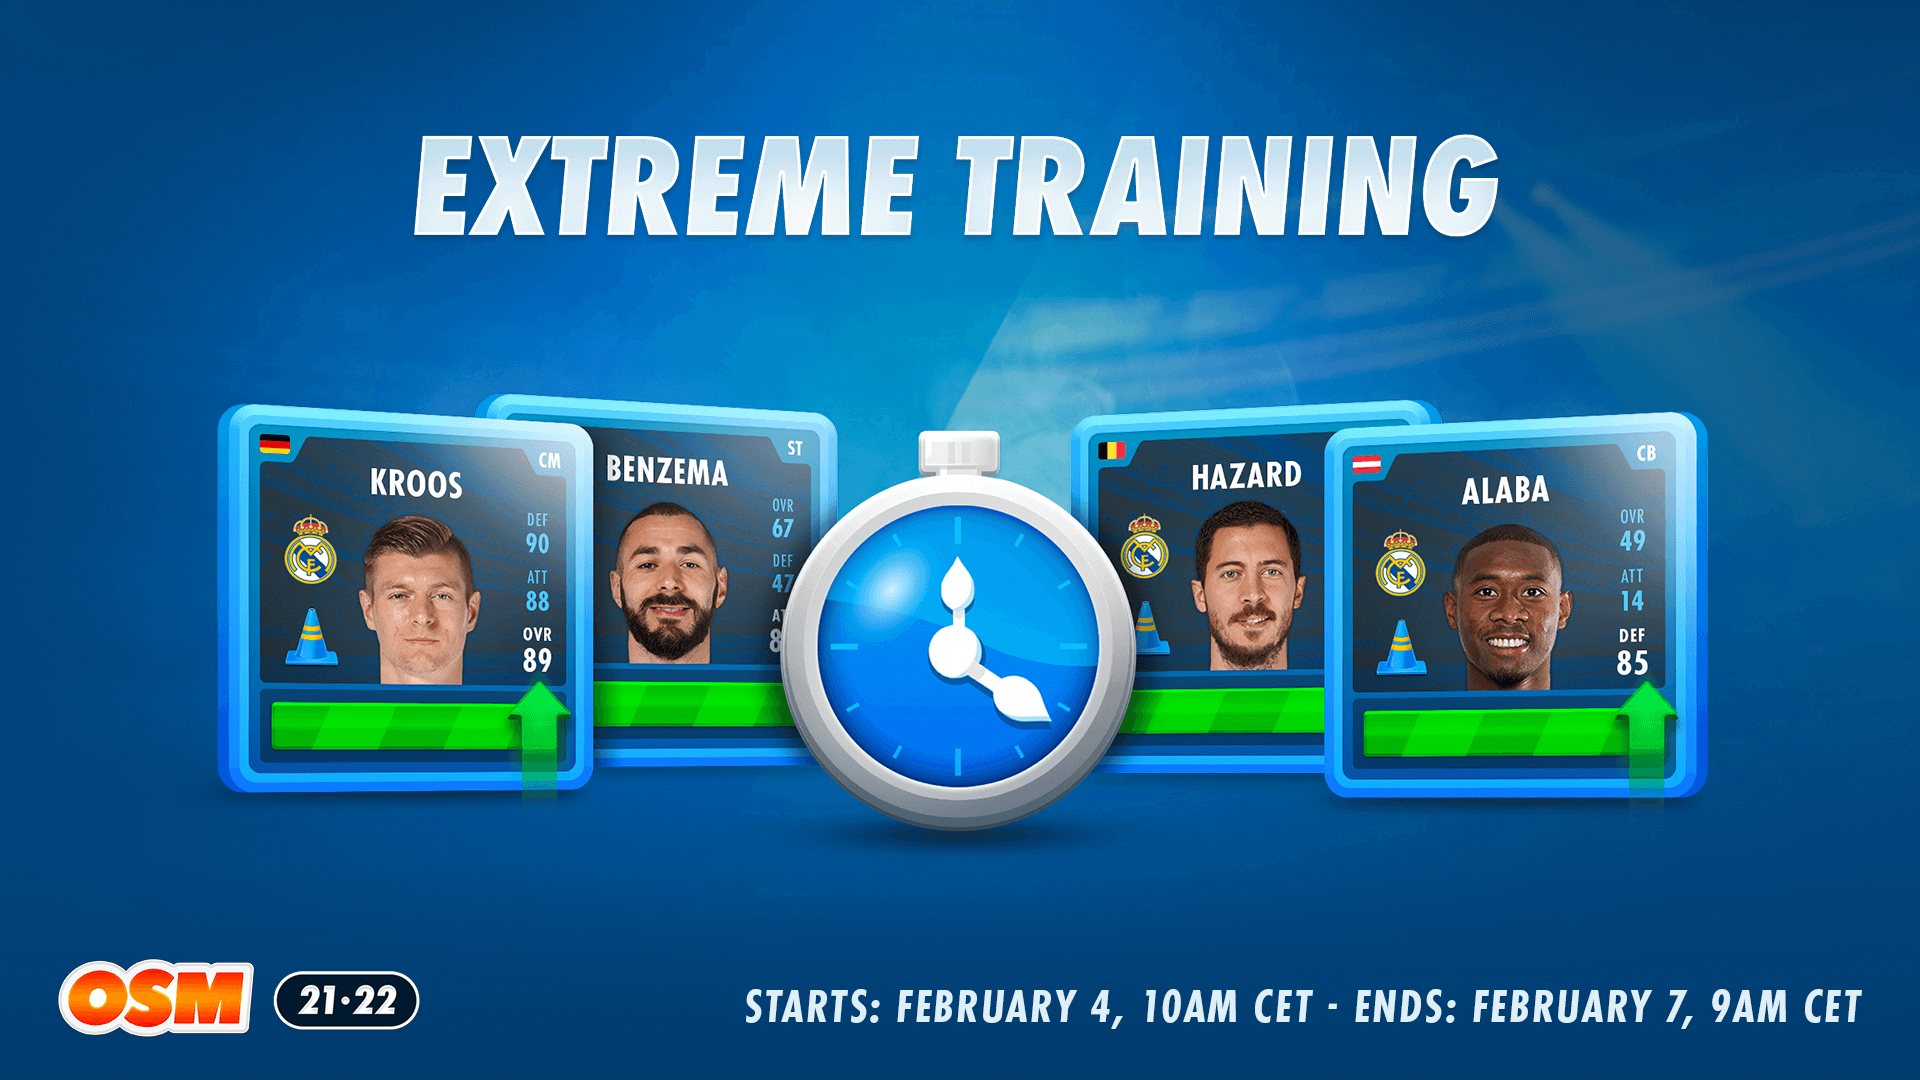 Forum_Extreme Training_REDDIT.png